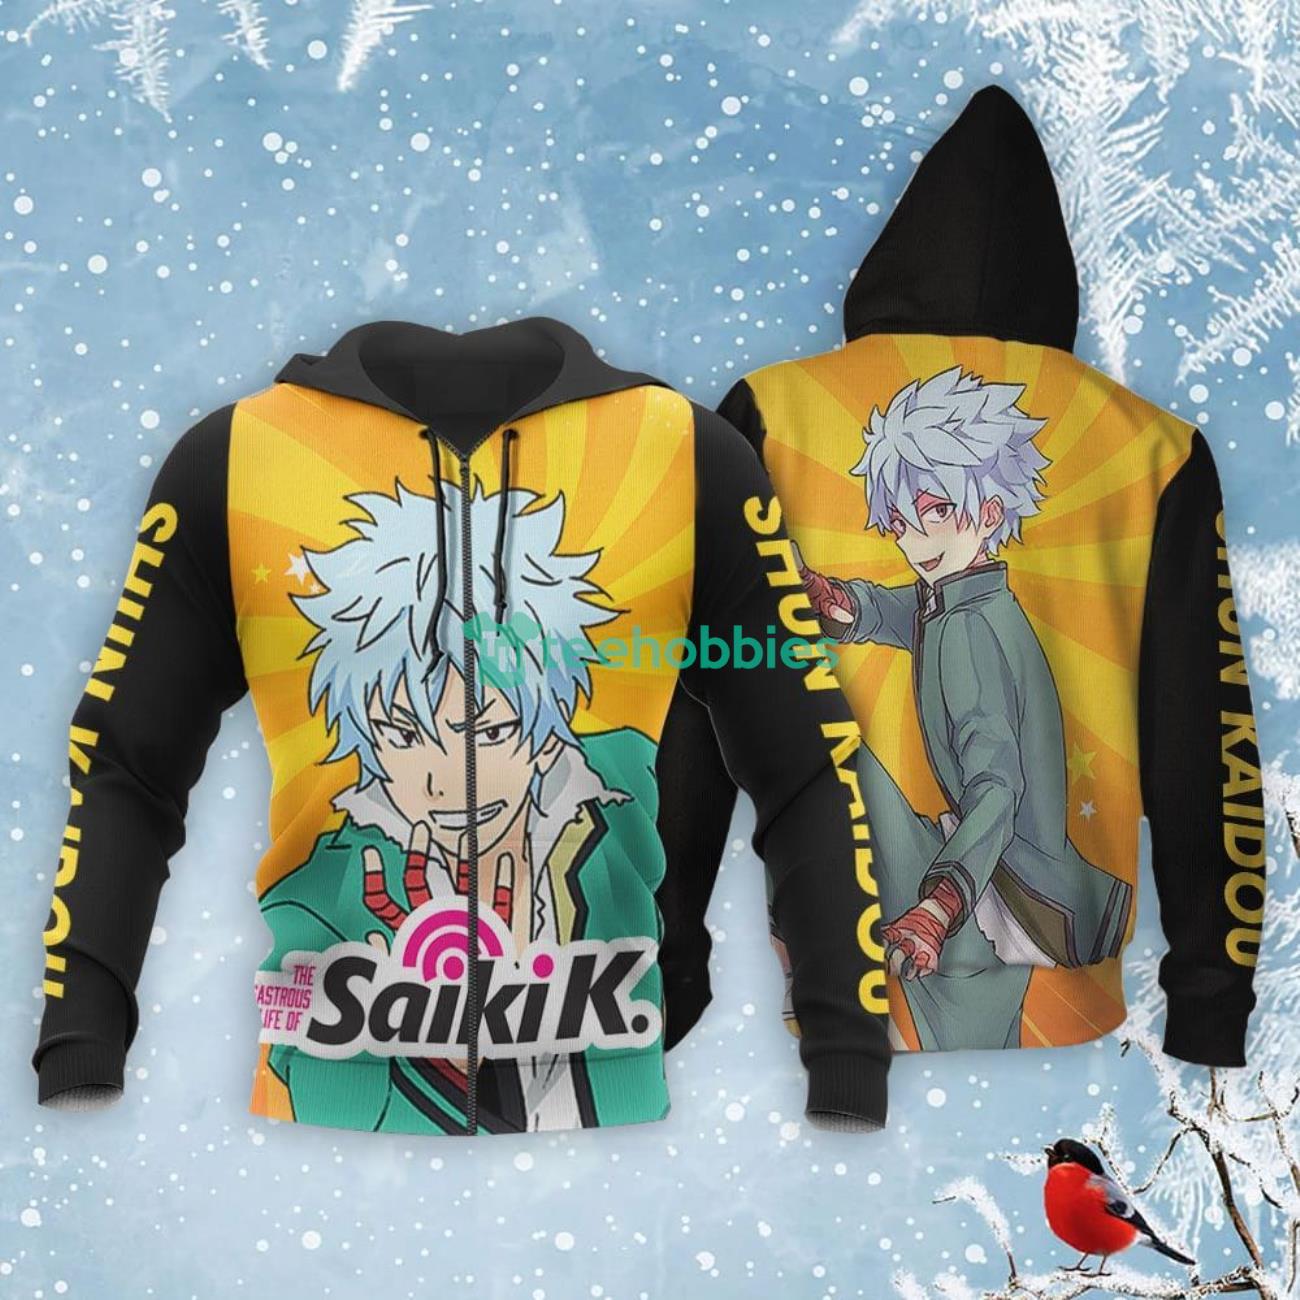 Saiki K Shun Kaidou All Over Printed 3D Shirt Saiki K Anime Fans Product Photo 1 Product photo 1